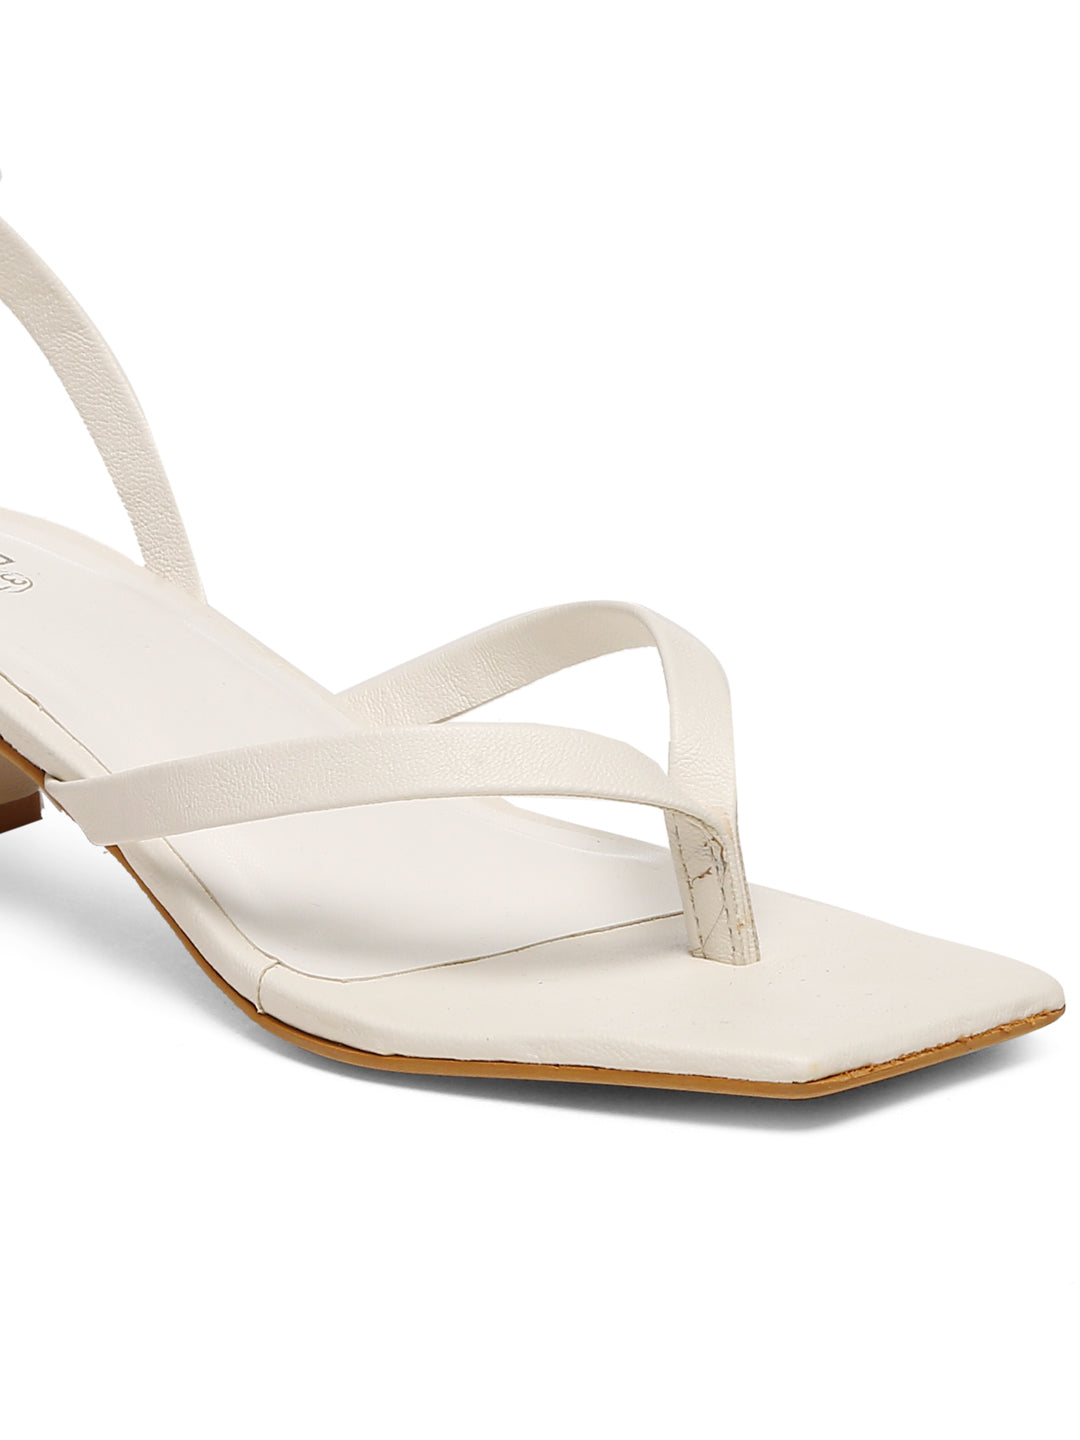 GNIST White Trendy Tie up Block Heel Sandal